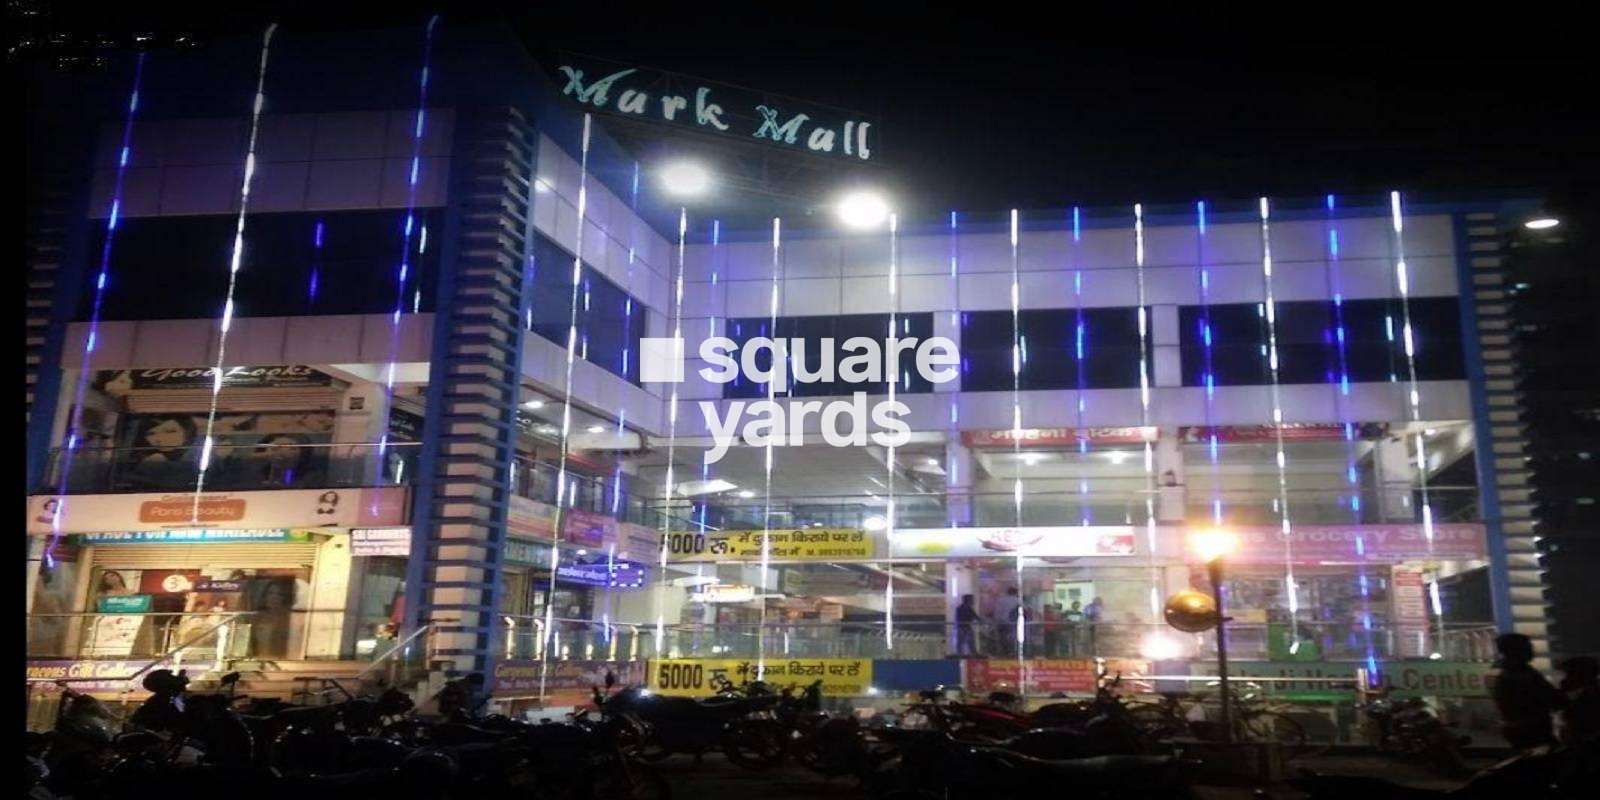 Sun Rise Mark Mall Cover Image